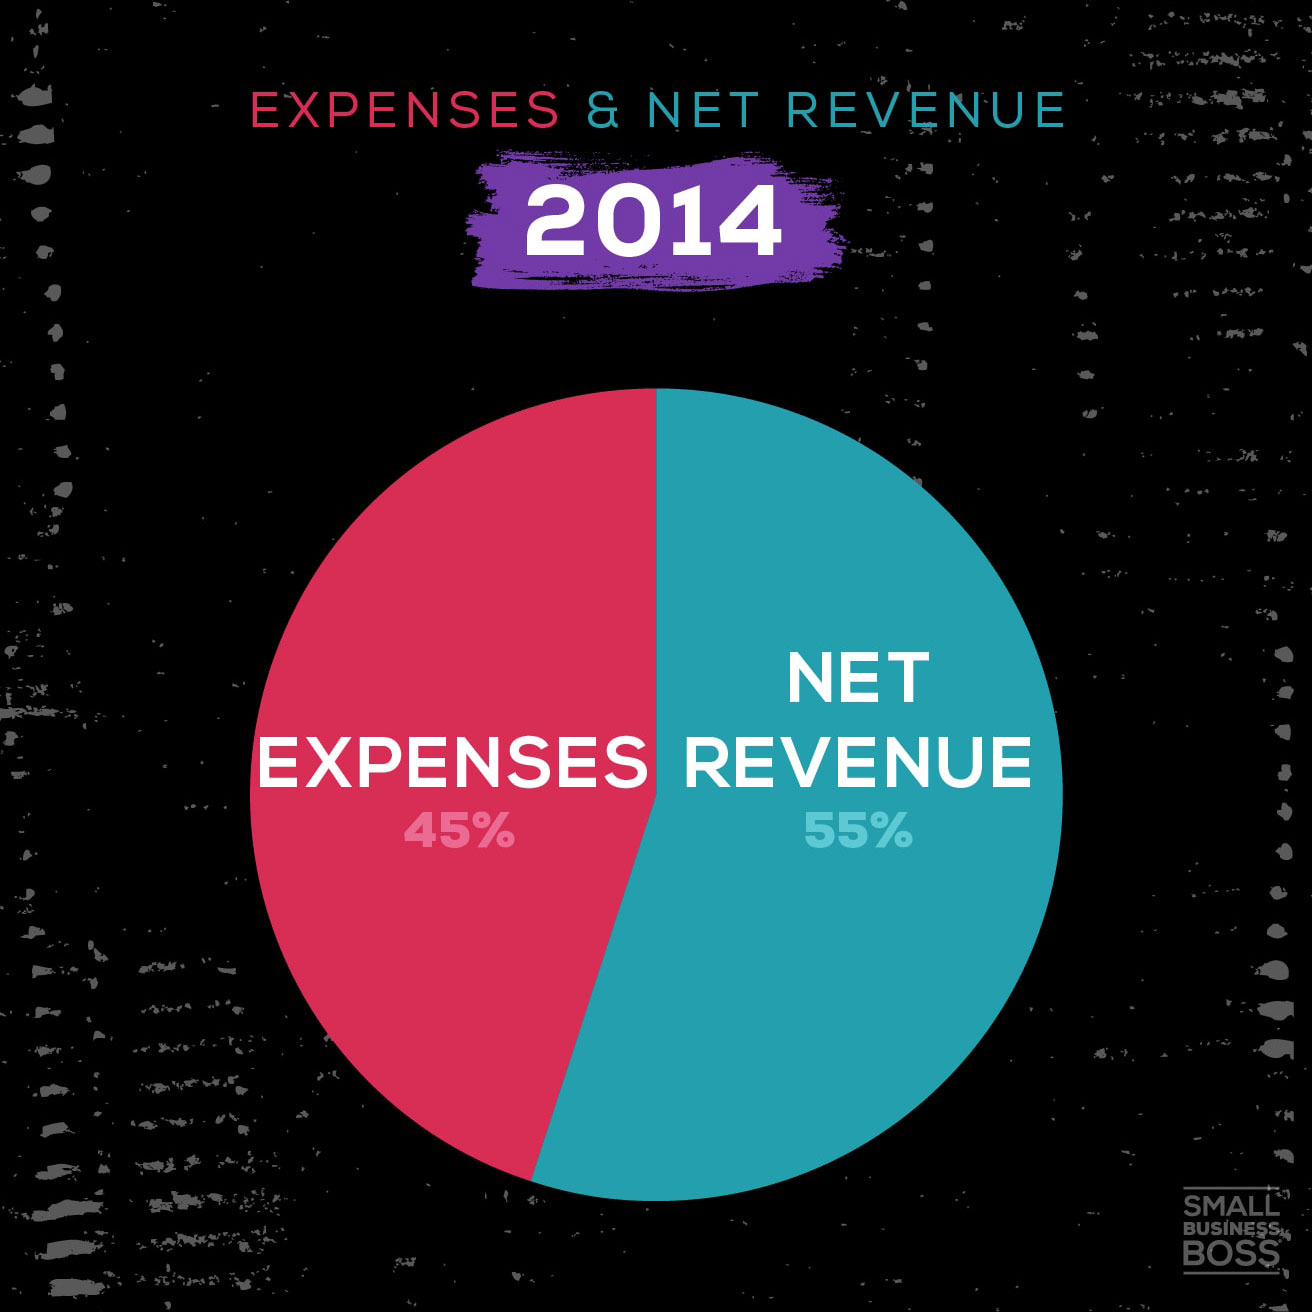 pie chart depicting expenses vs revenue in 2014